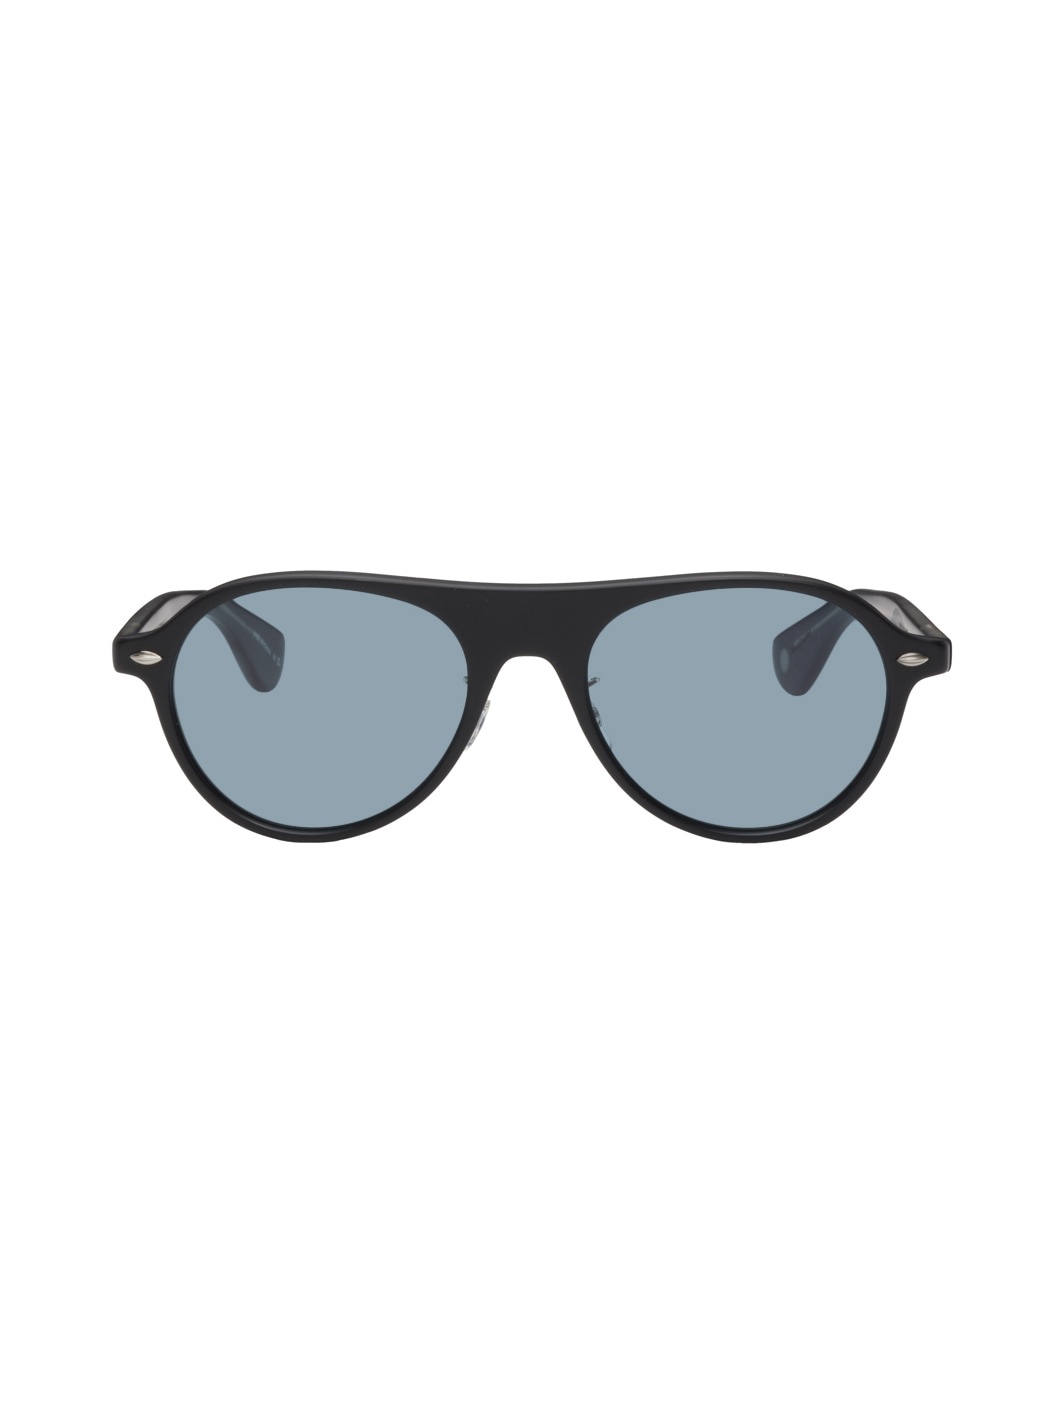 Black Lady Eckhart Sunglasses - 1